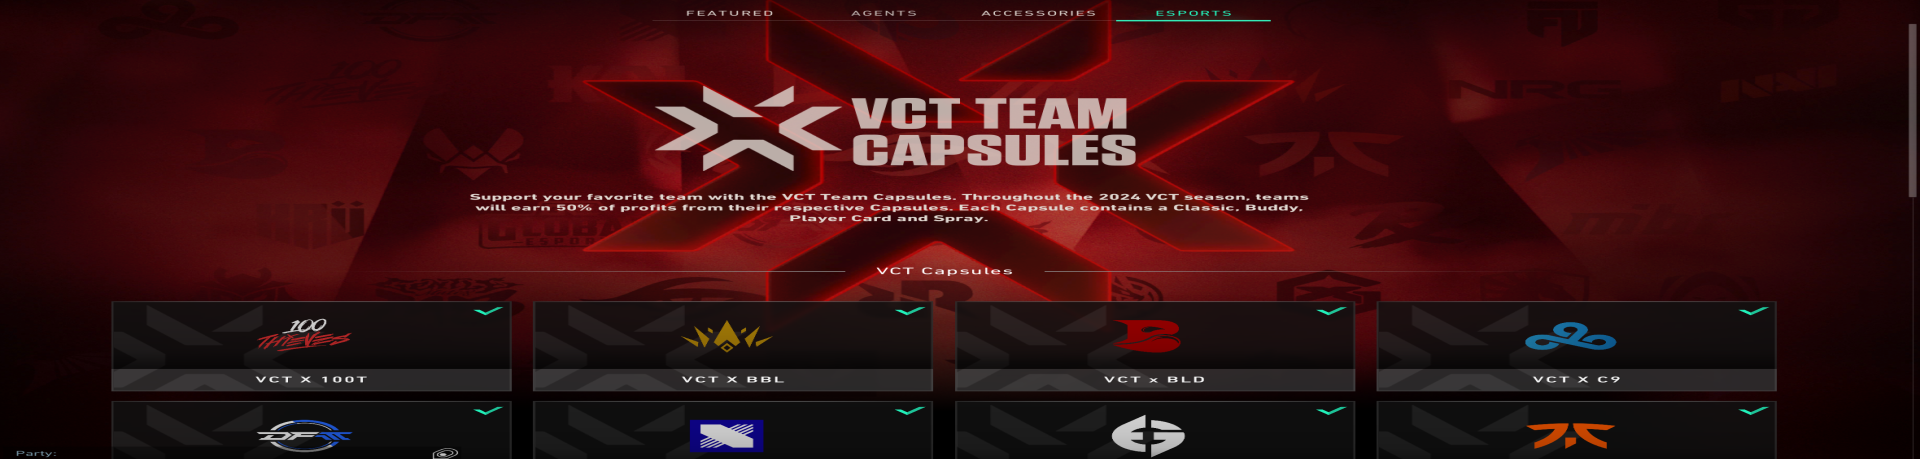 VCT Team Capsule